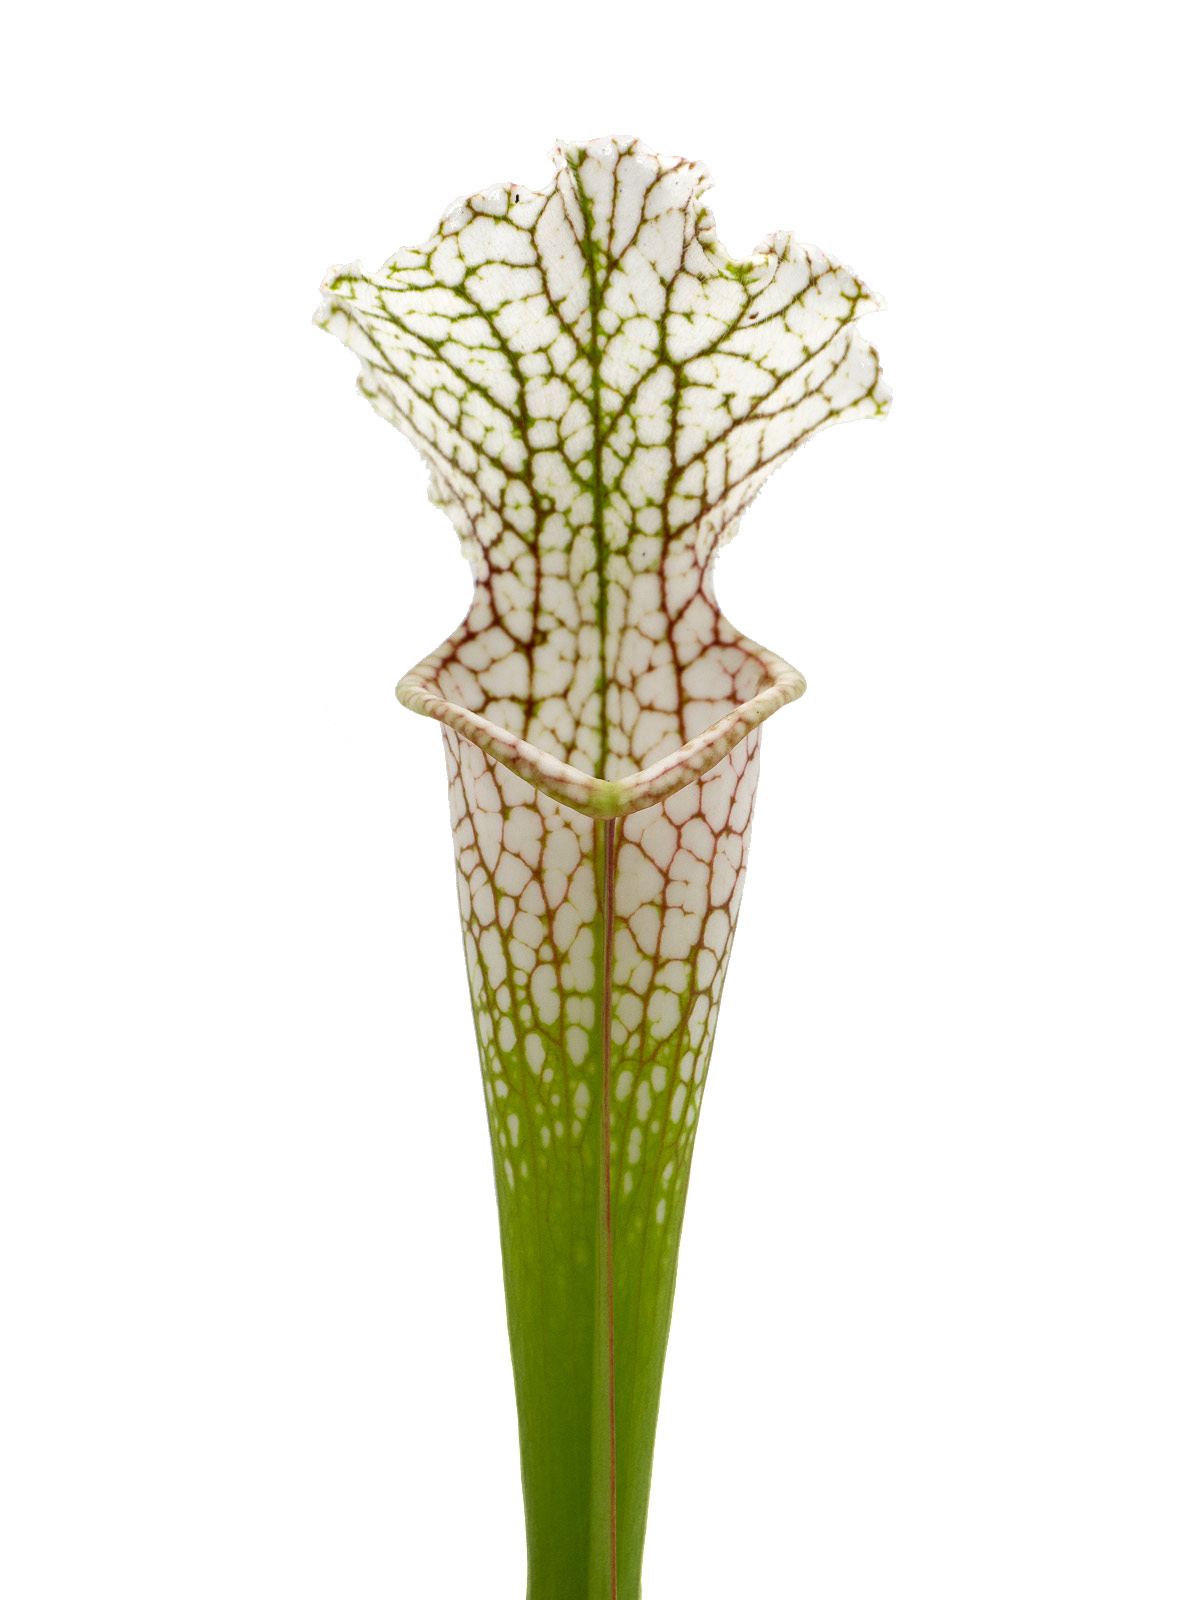 Sarracenia leucophylla 2vv x (leucophylla x oreophila) - Clone B2, Mirek Srba